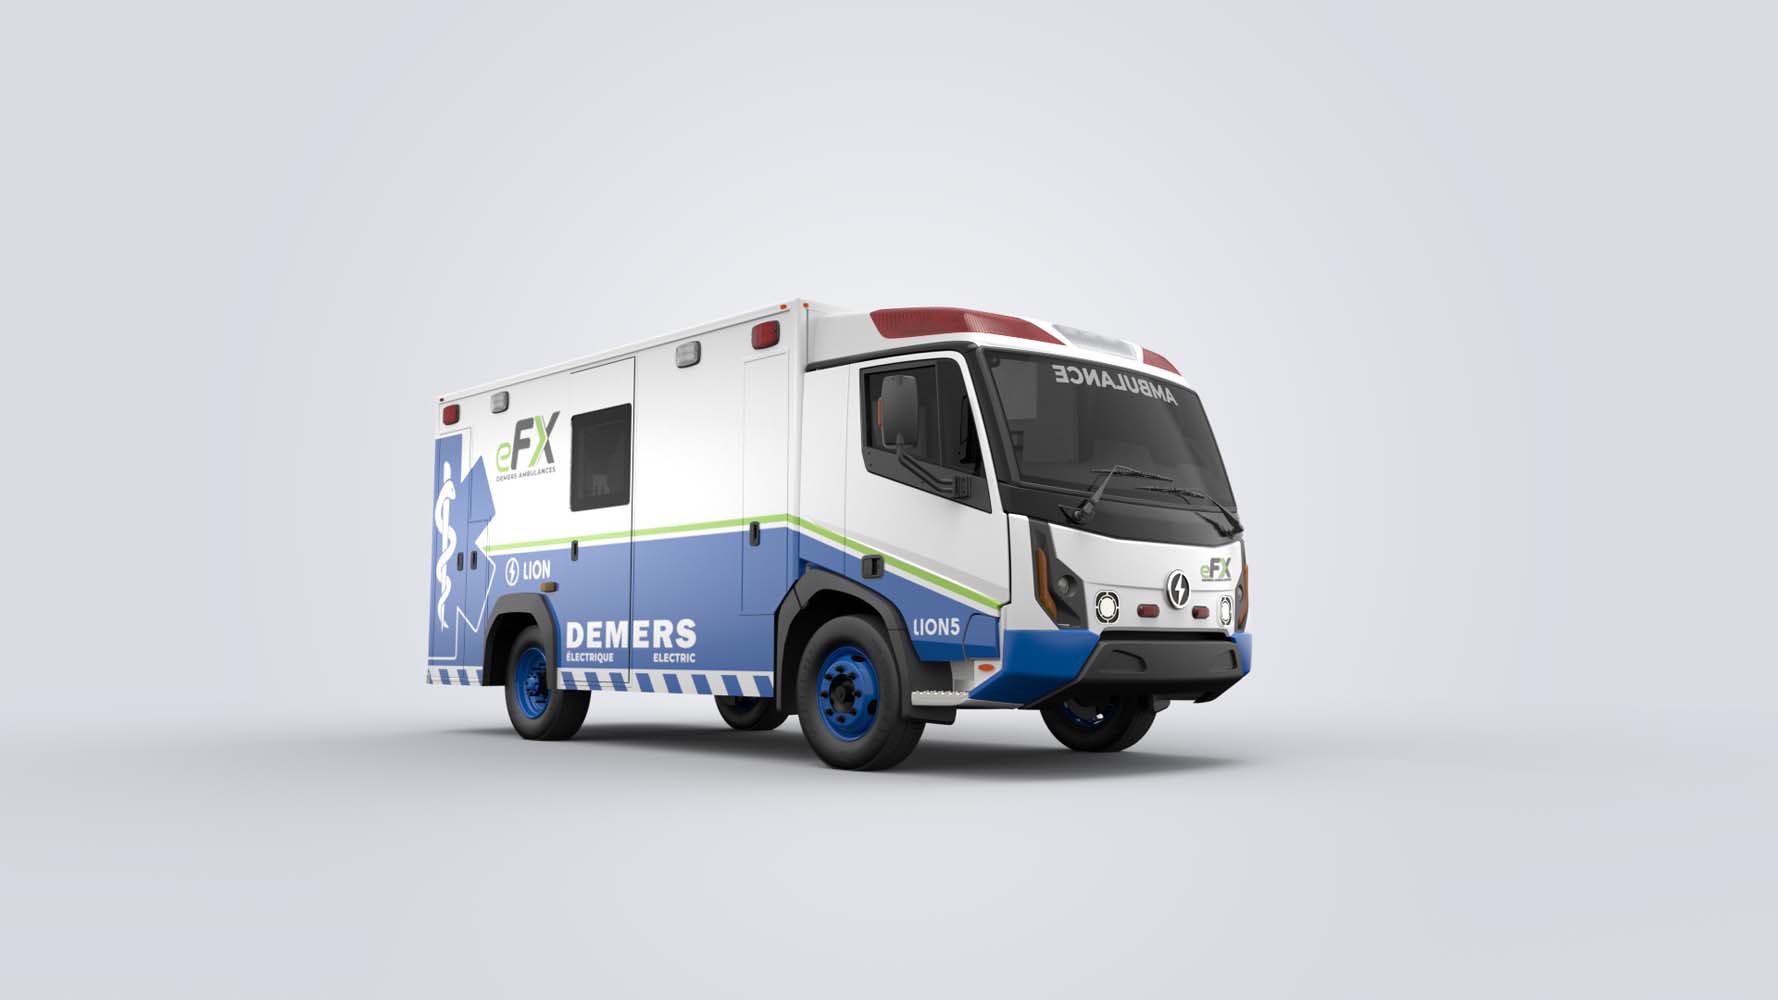 Step Inside Eight New Ambulances from Demers Braun Crestline Medix at FDIC  International 2022 - JEMS: EMS, Emergency Medical Services - Training,  Paramedic, EMT News